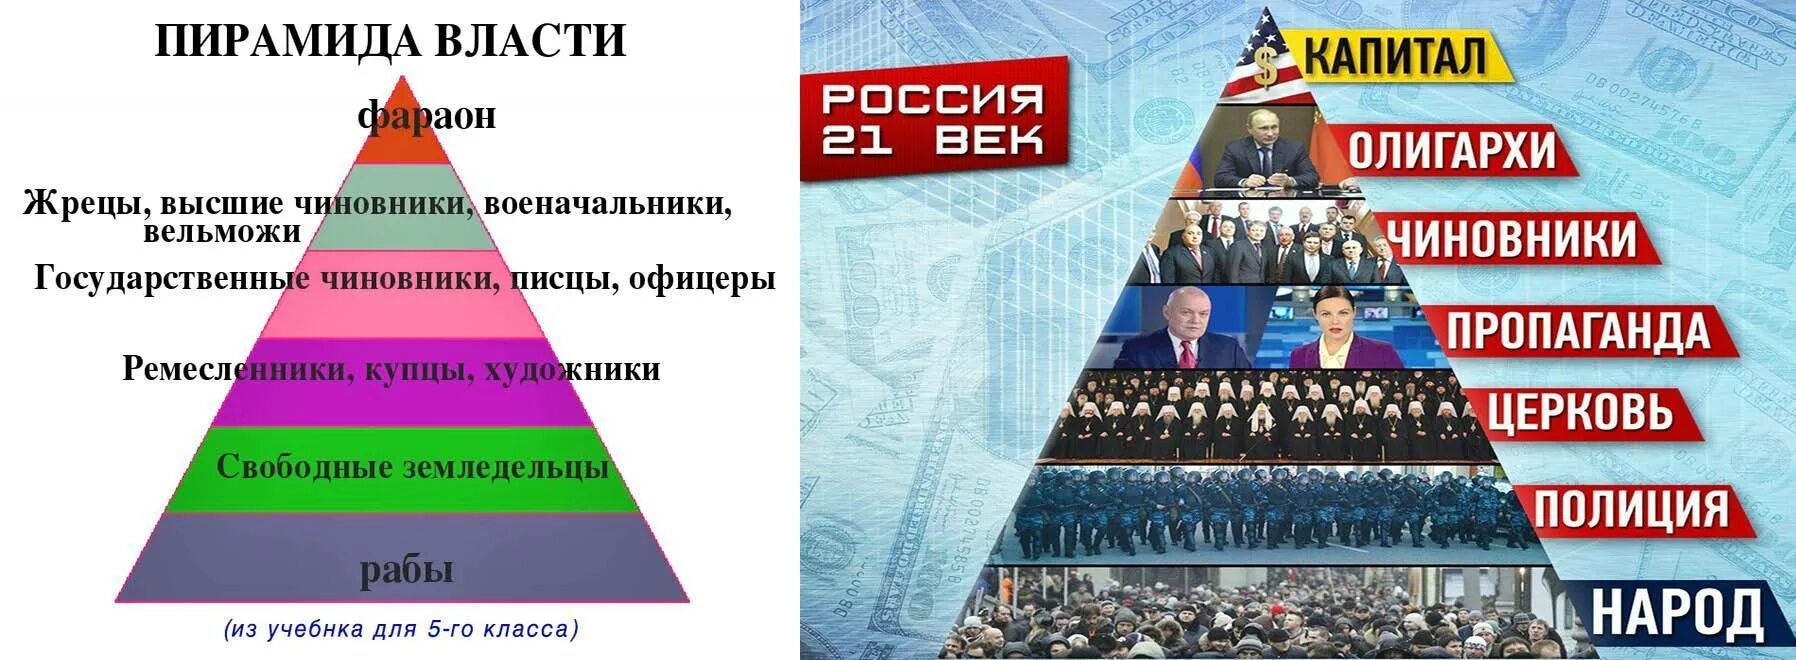 Пирамида власти. Пиримала власти. Пирамида ВЛАСТB. Пирамида власти в России.